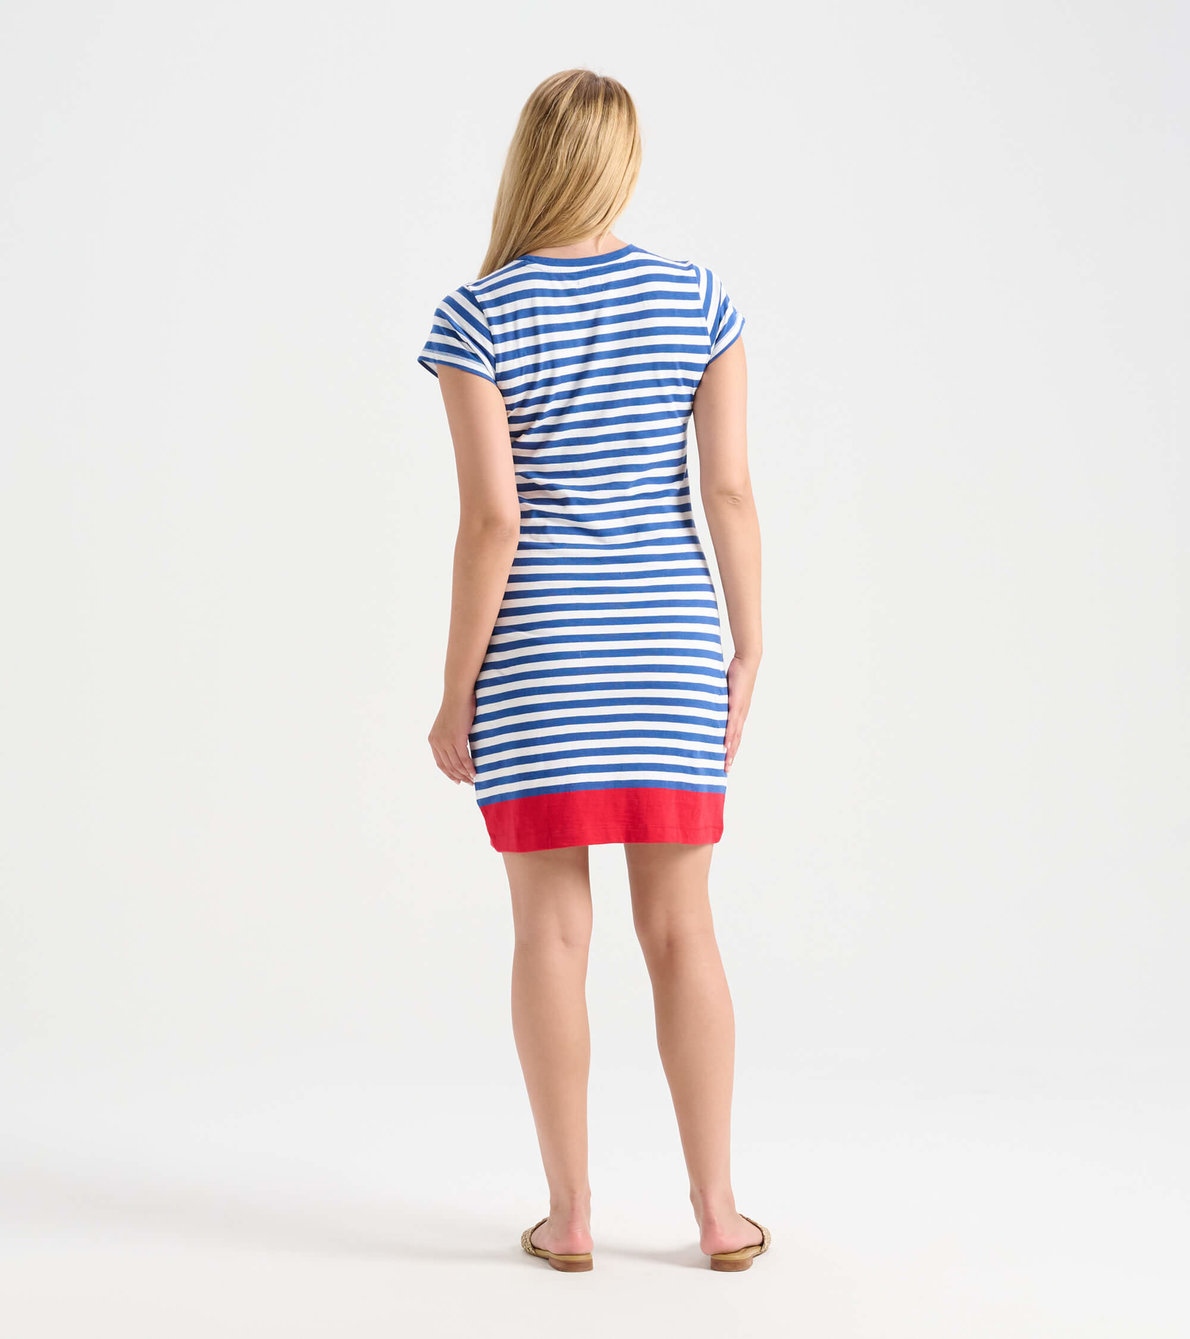 View larger image of Women's Nautical Stripes Crew Neck T-Shirt Dress